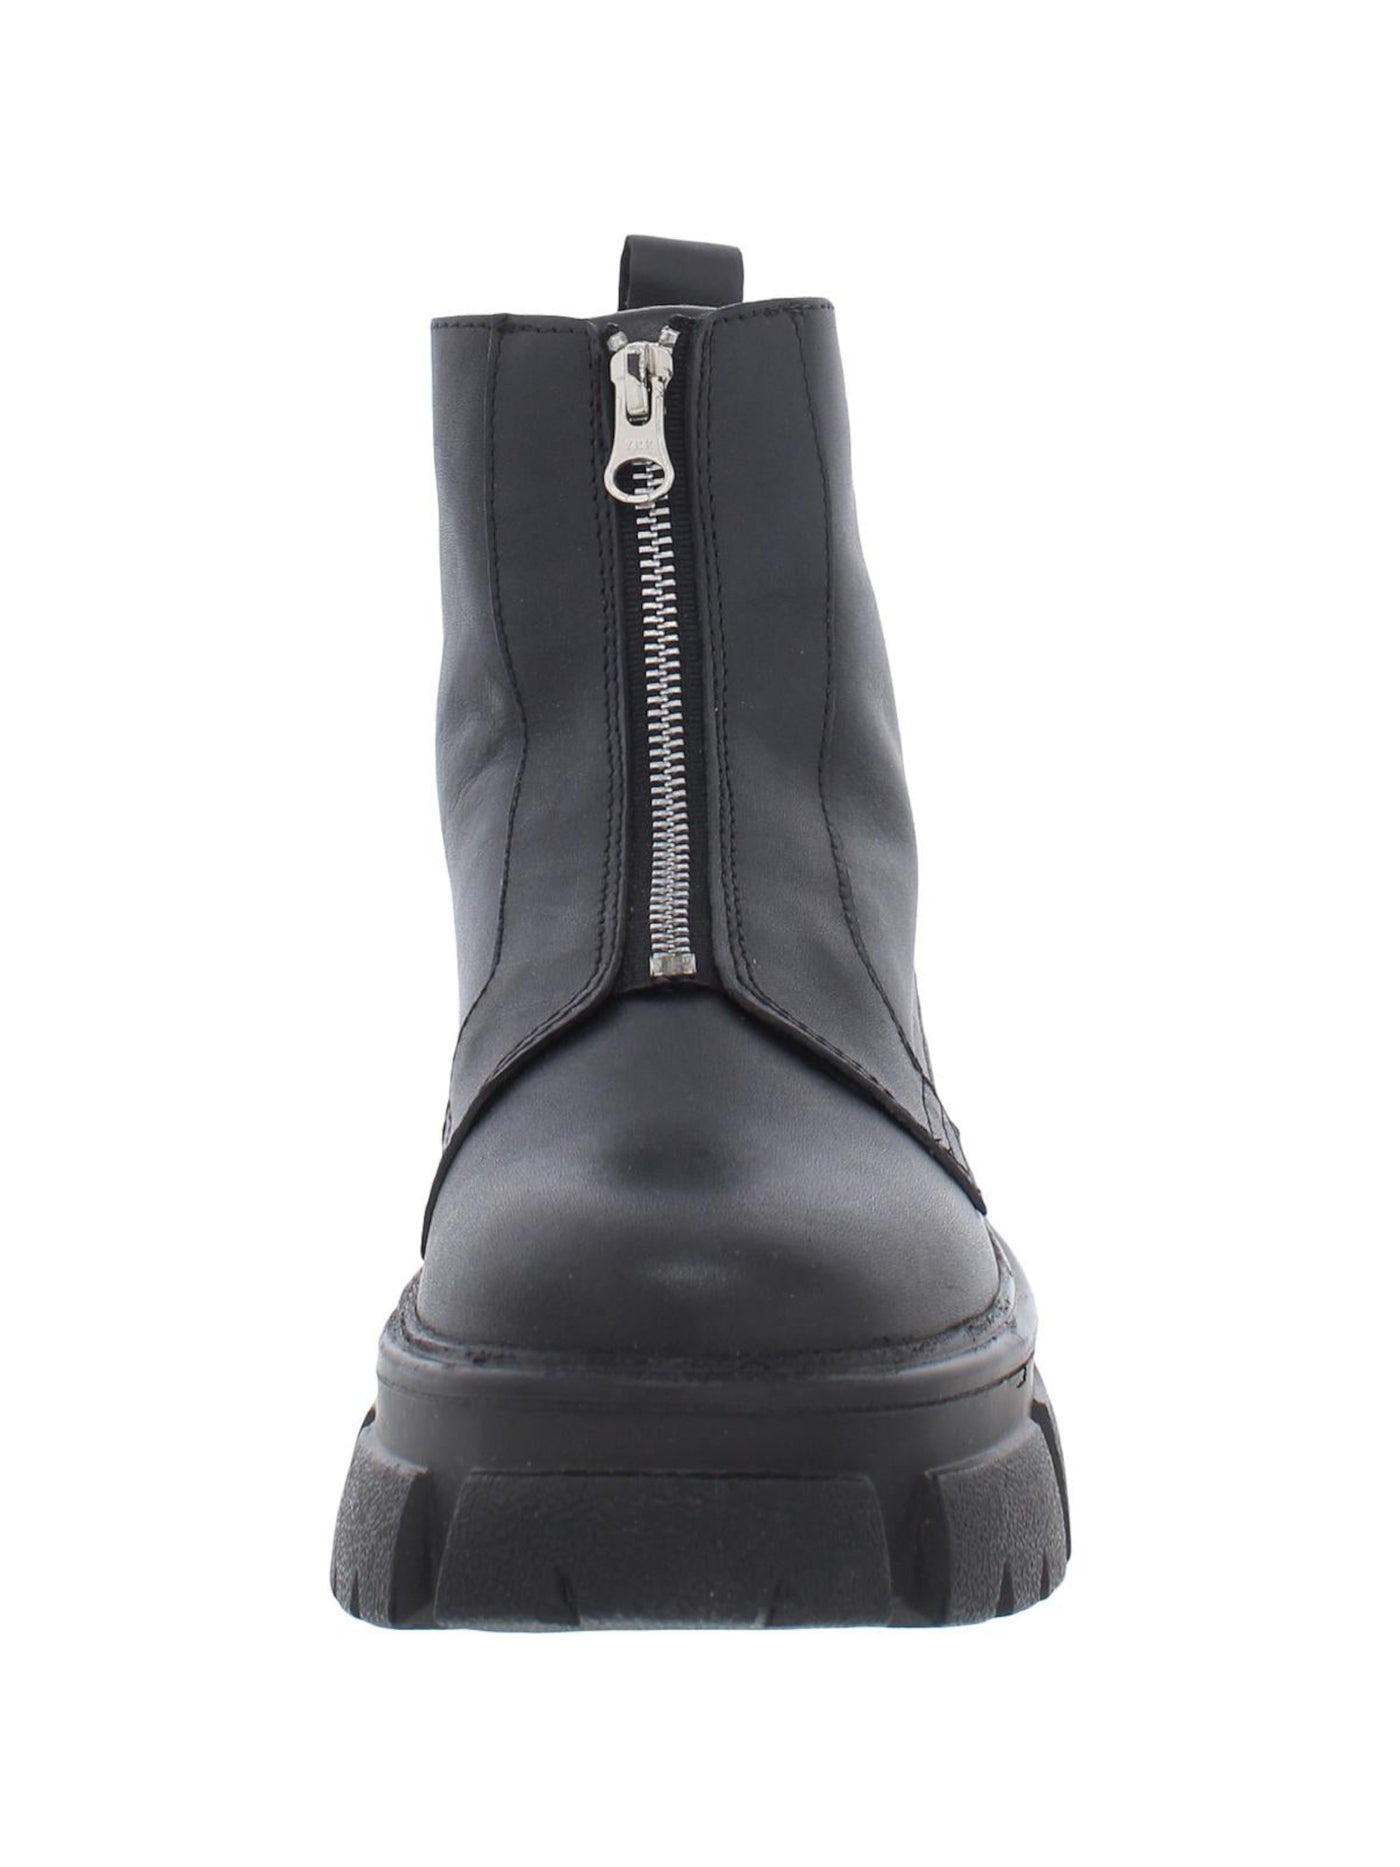 AQUA Womens Black Pull Tab 1-1/2" Platform Comfort True Round Toe Zip-Up Leather Booties 6 M